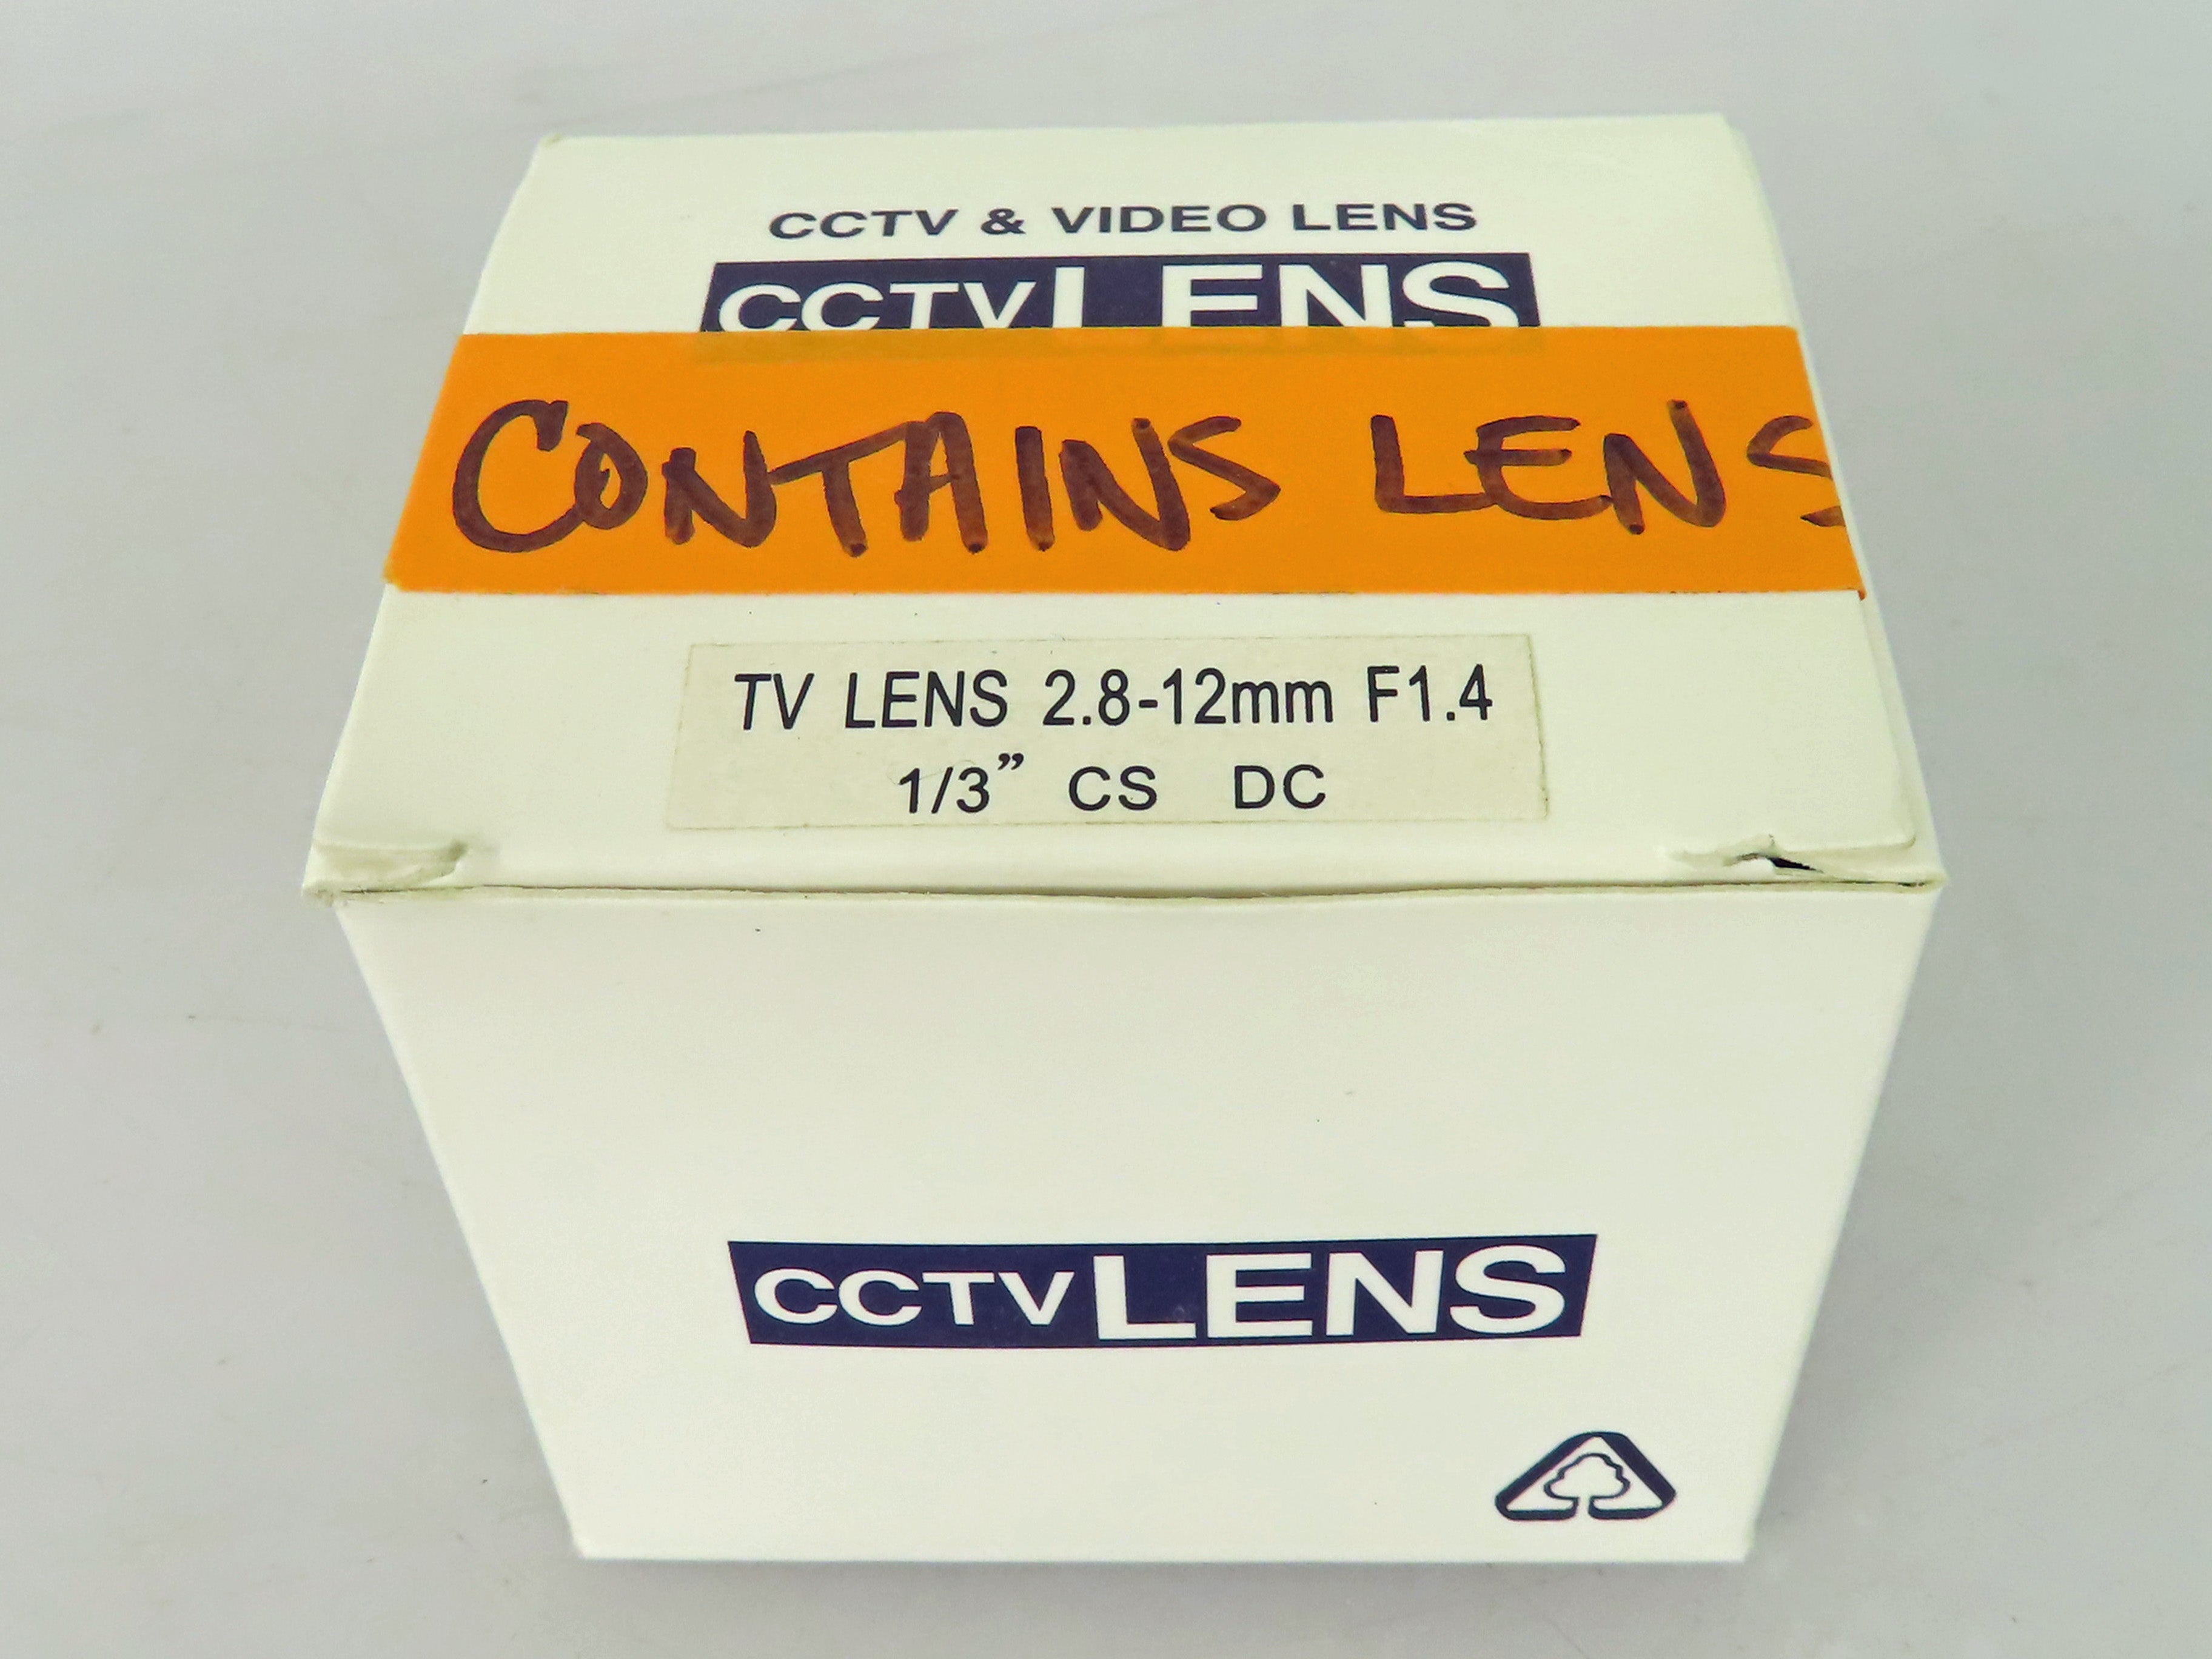 CCTV Lens 2.8-12mm CS DC F1.4 1/3”